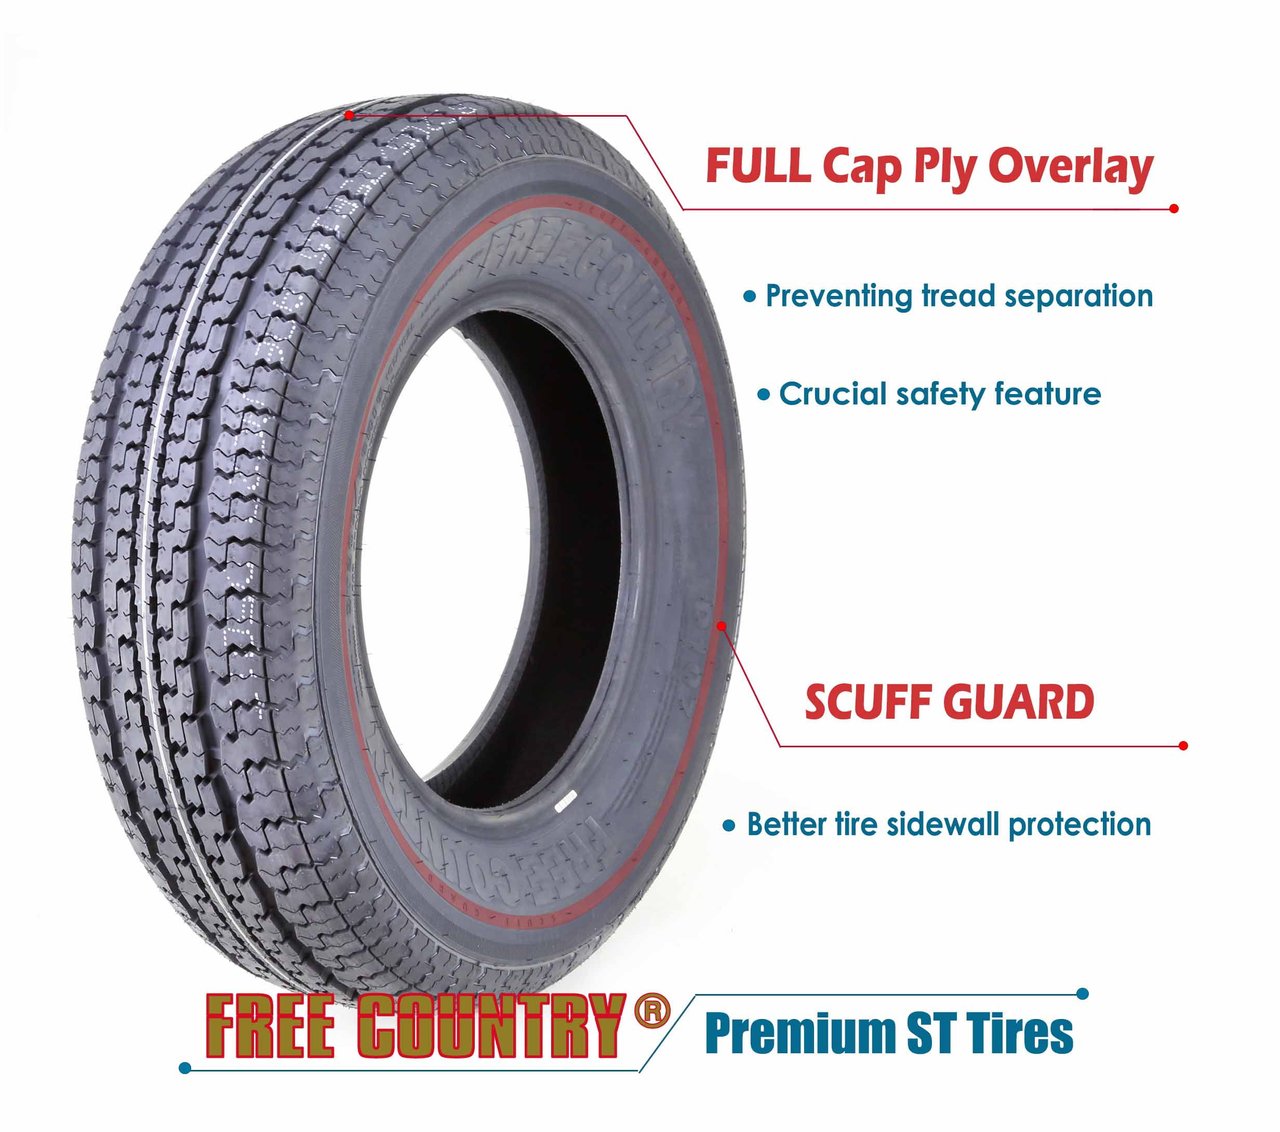 1 Grand Ride Set 4 FREE COUNTRY Premium Trailer Tires 8PR Load Range D w/Featured Side Scuff Guard 11131